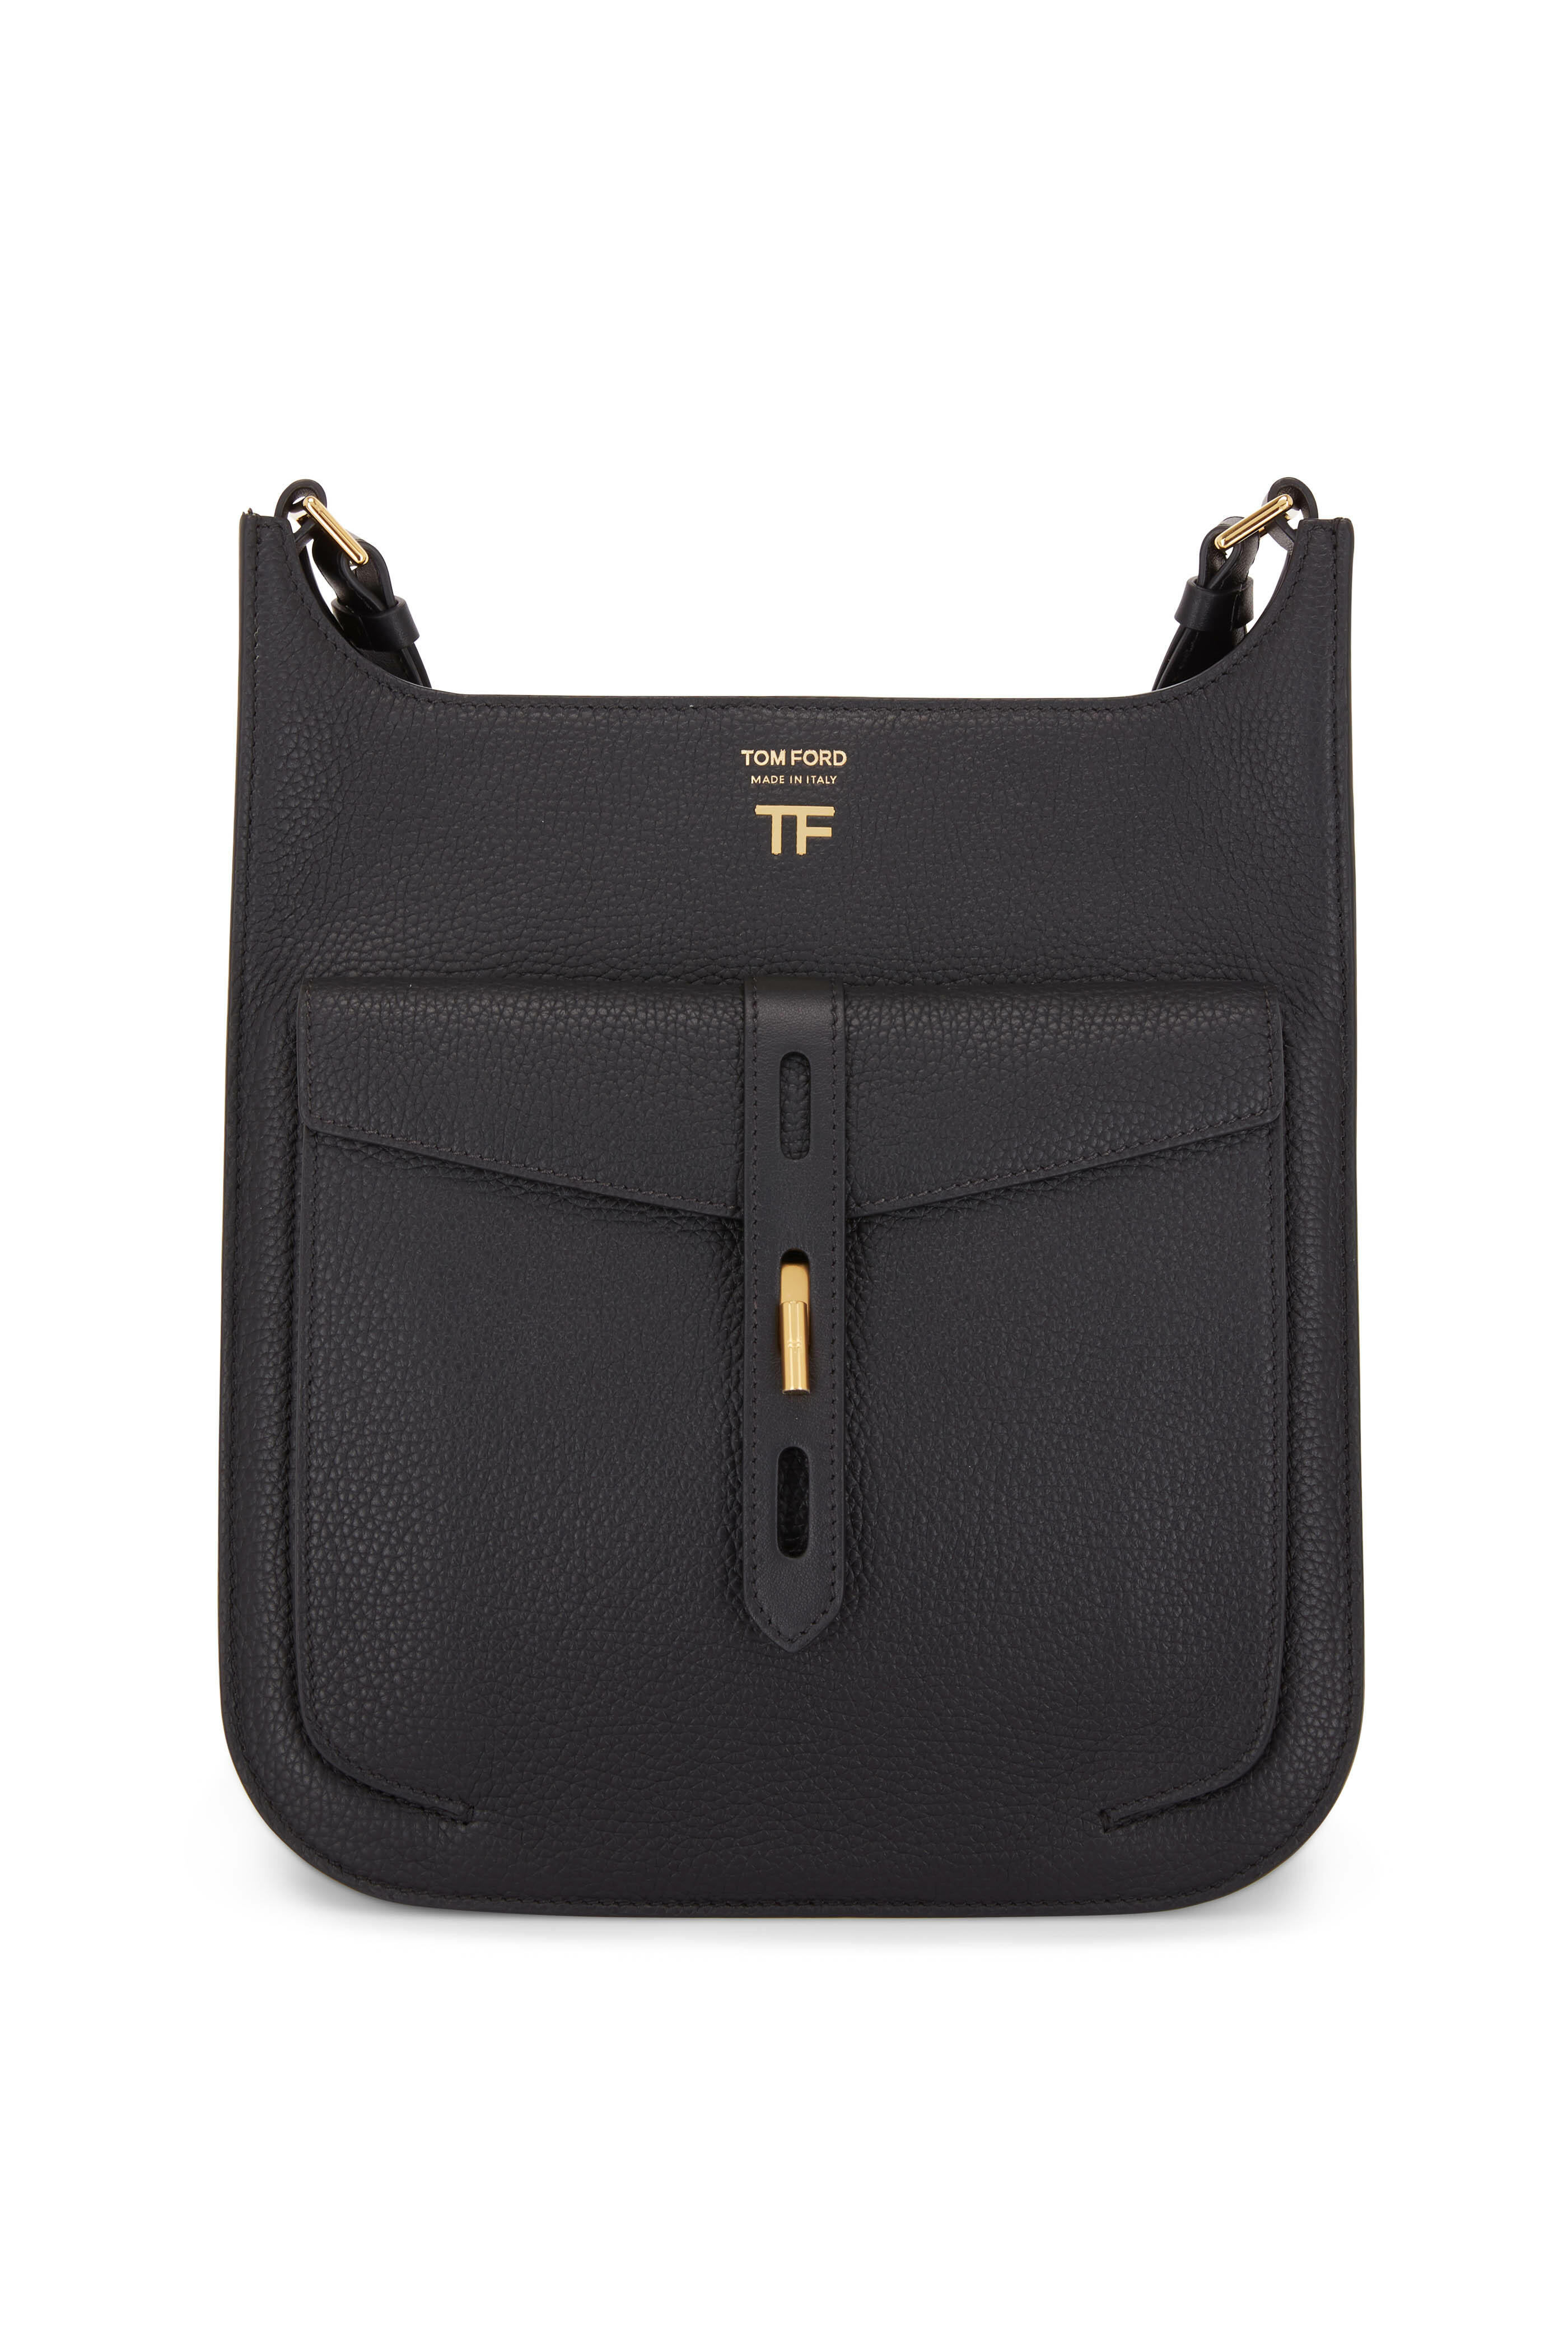 Tom Ford - Rialto Black Grain Leather Medium Crossbody Bag